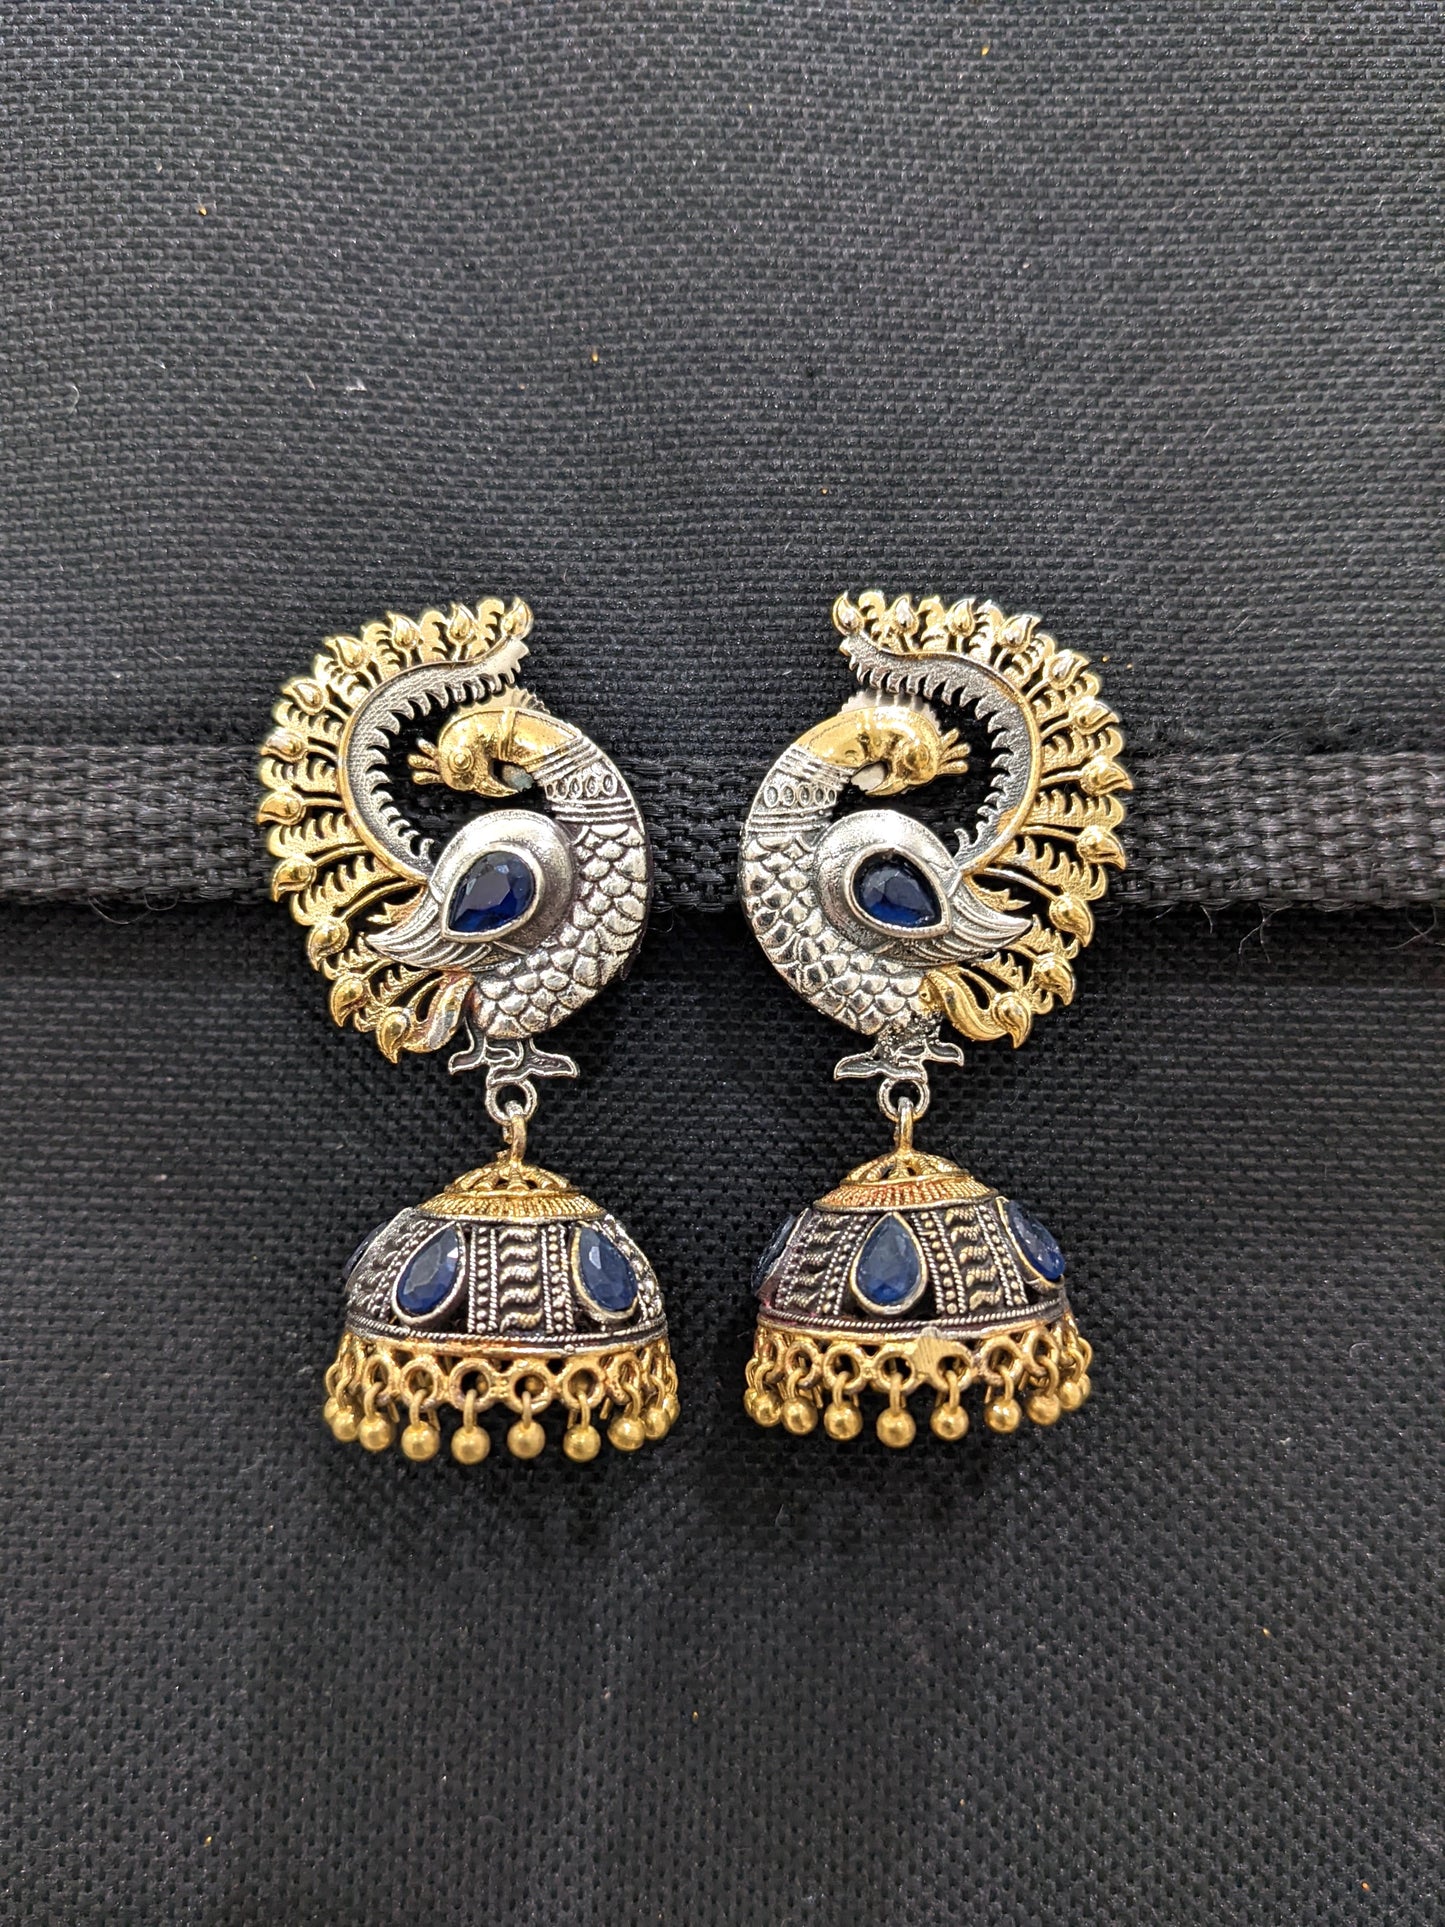 Peacock dual tone oxidized silver jhumka earrings